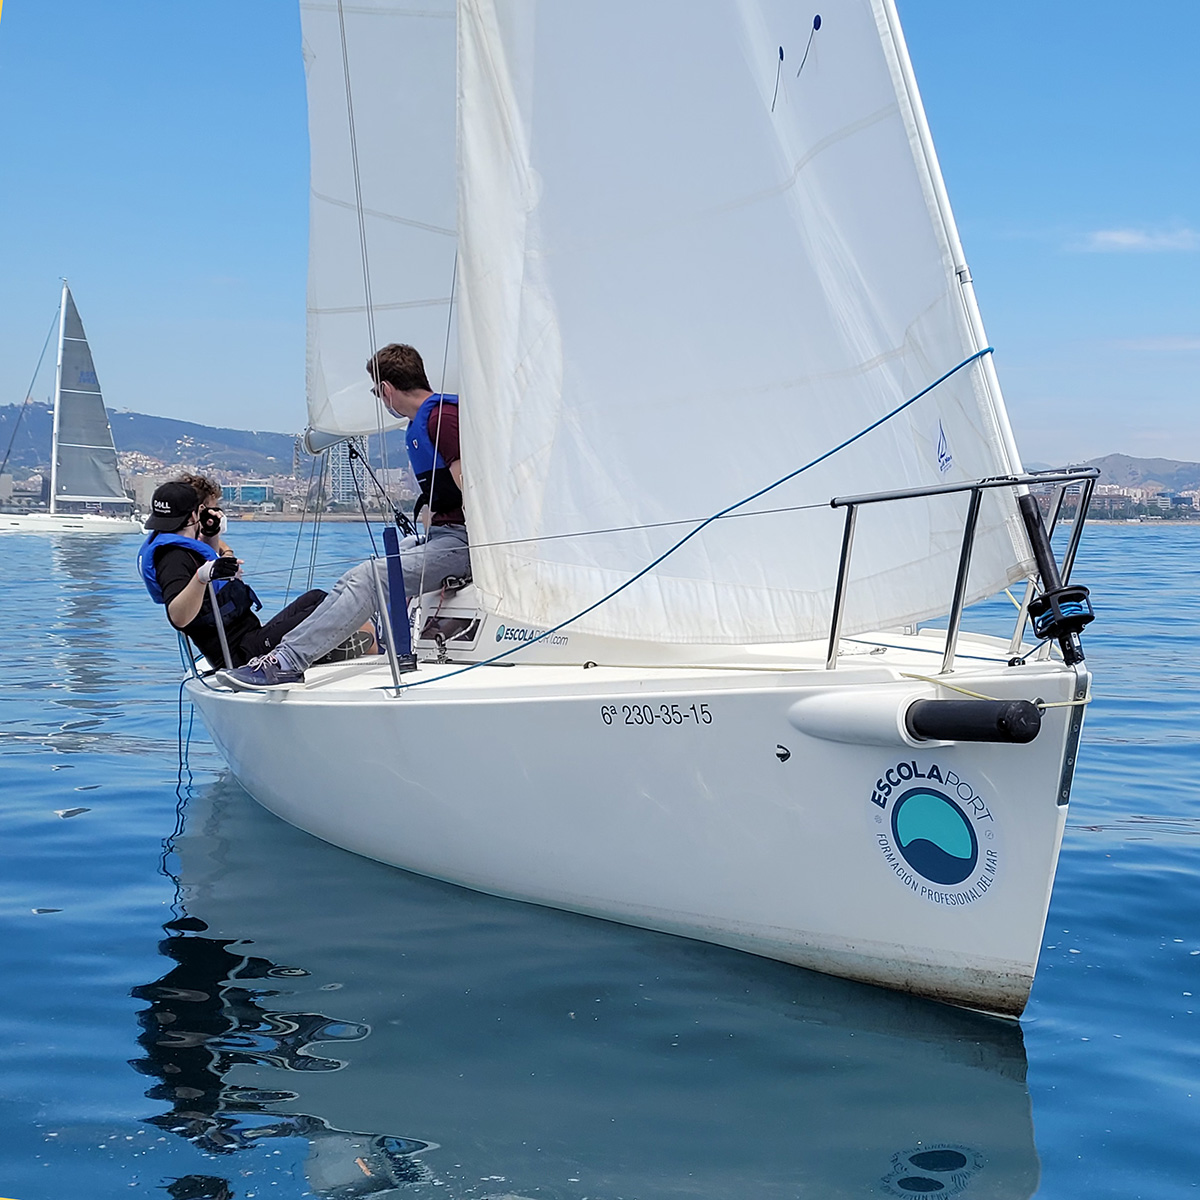 PNB prácticas de navegación a vela en el Port Olímpic de Barcelona - Escola Port